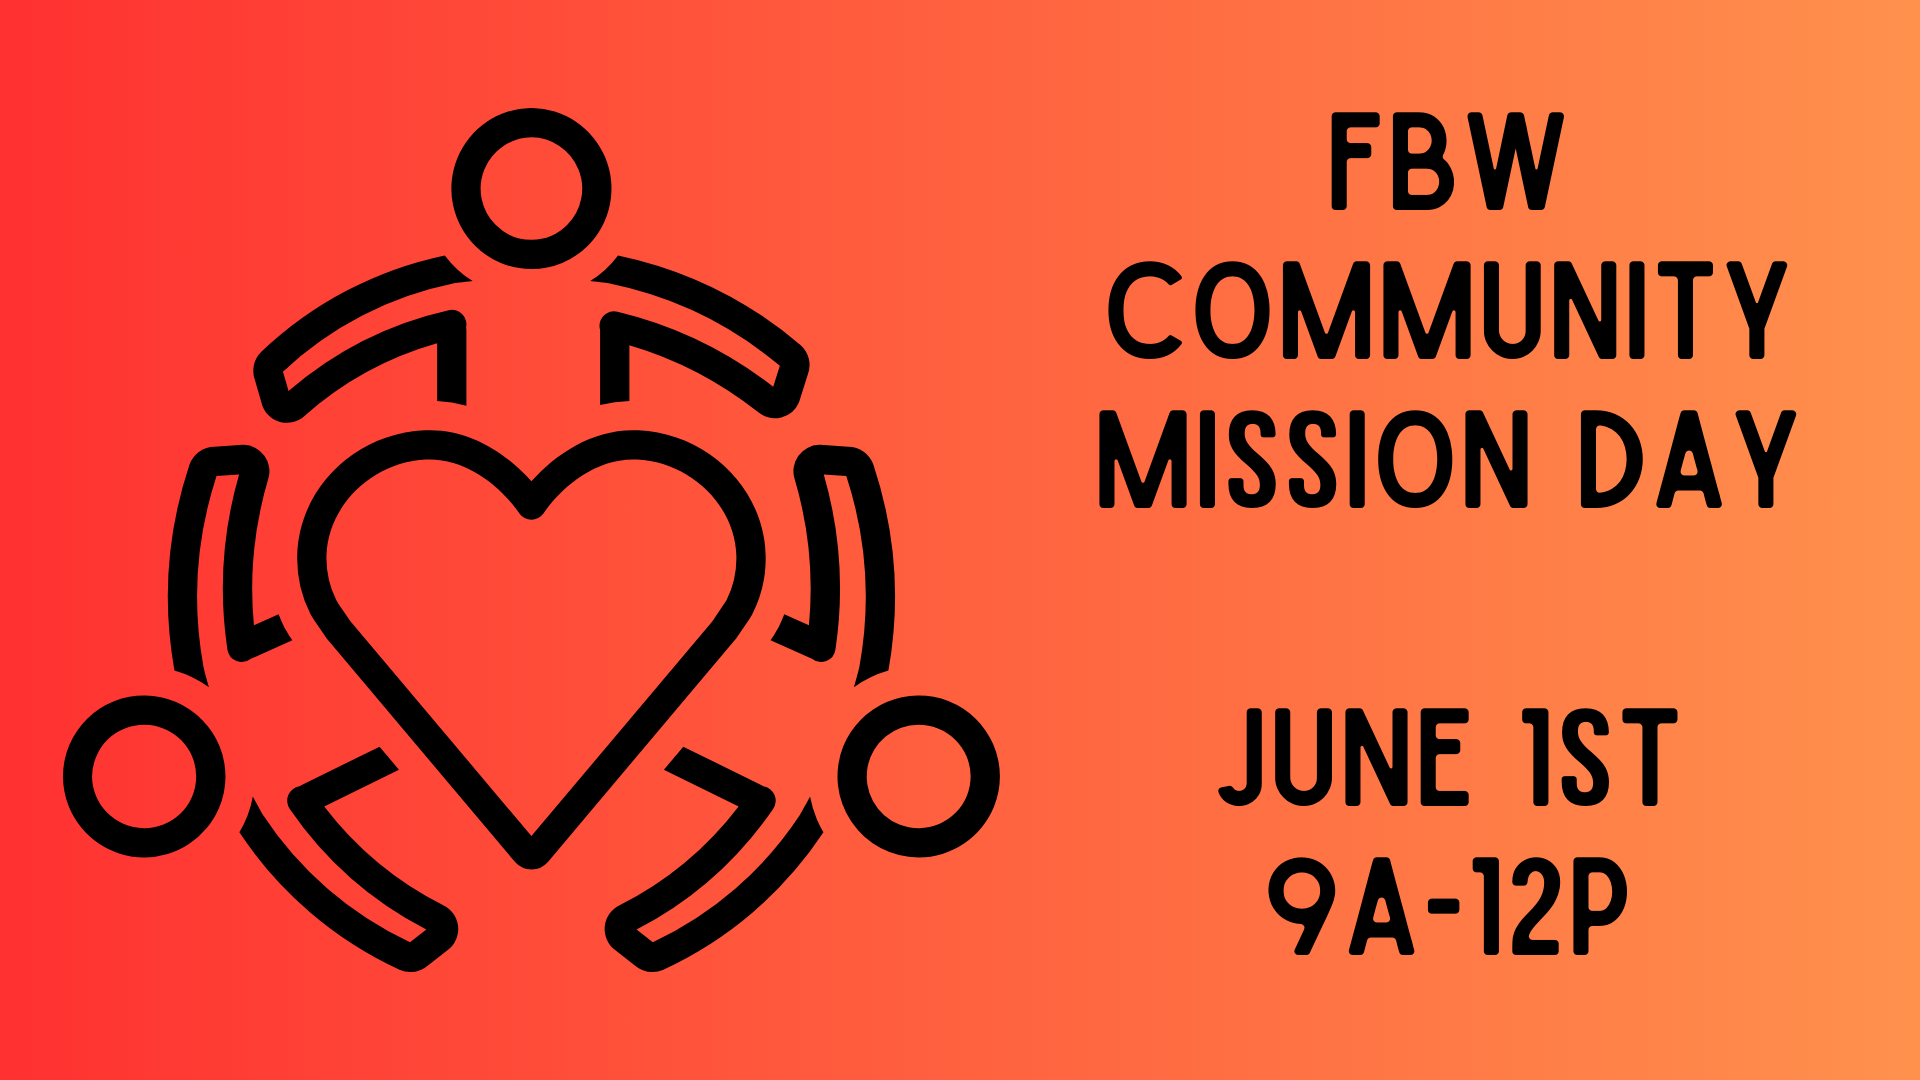 FBW Community Mission Day June 1st 9a-12p.png